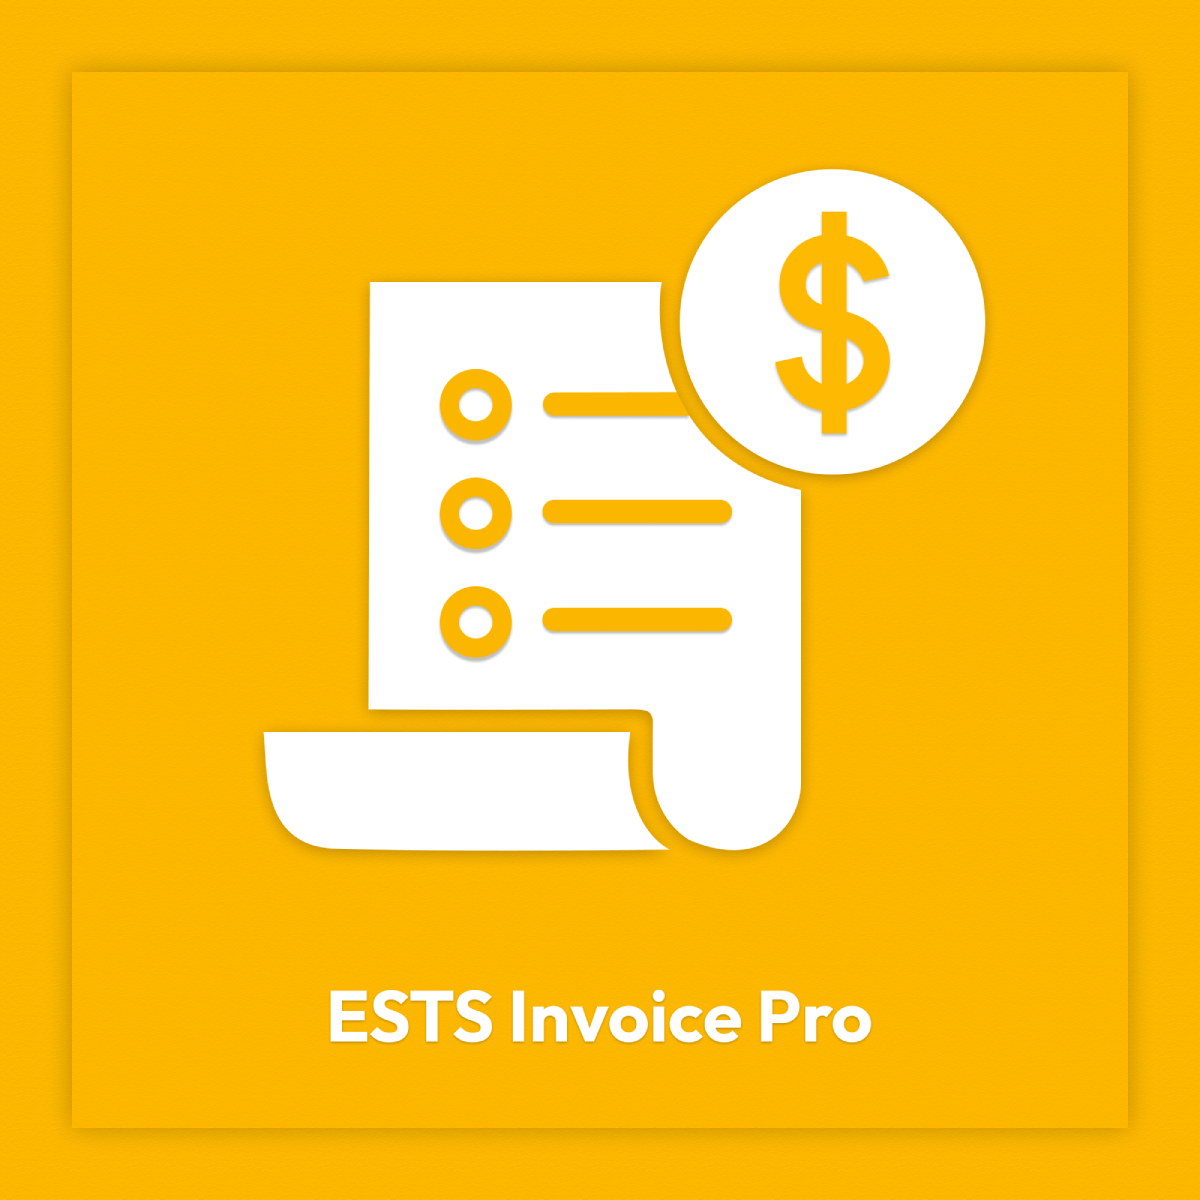 ESTS Invoice Pro